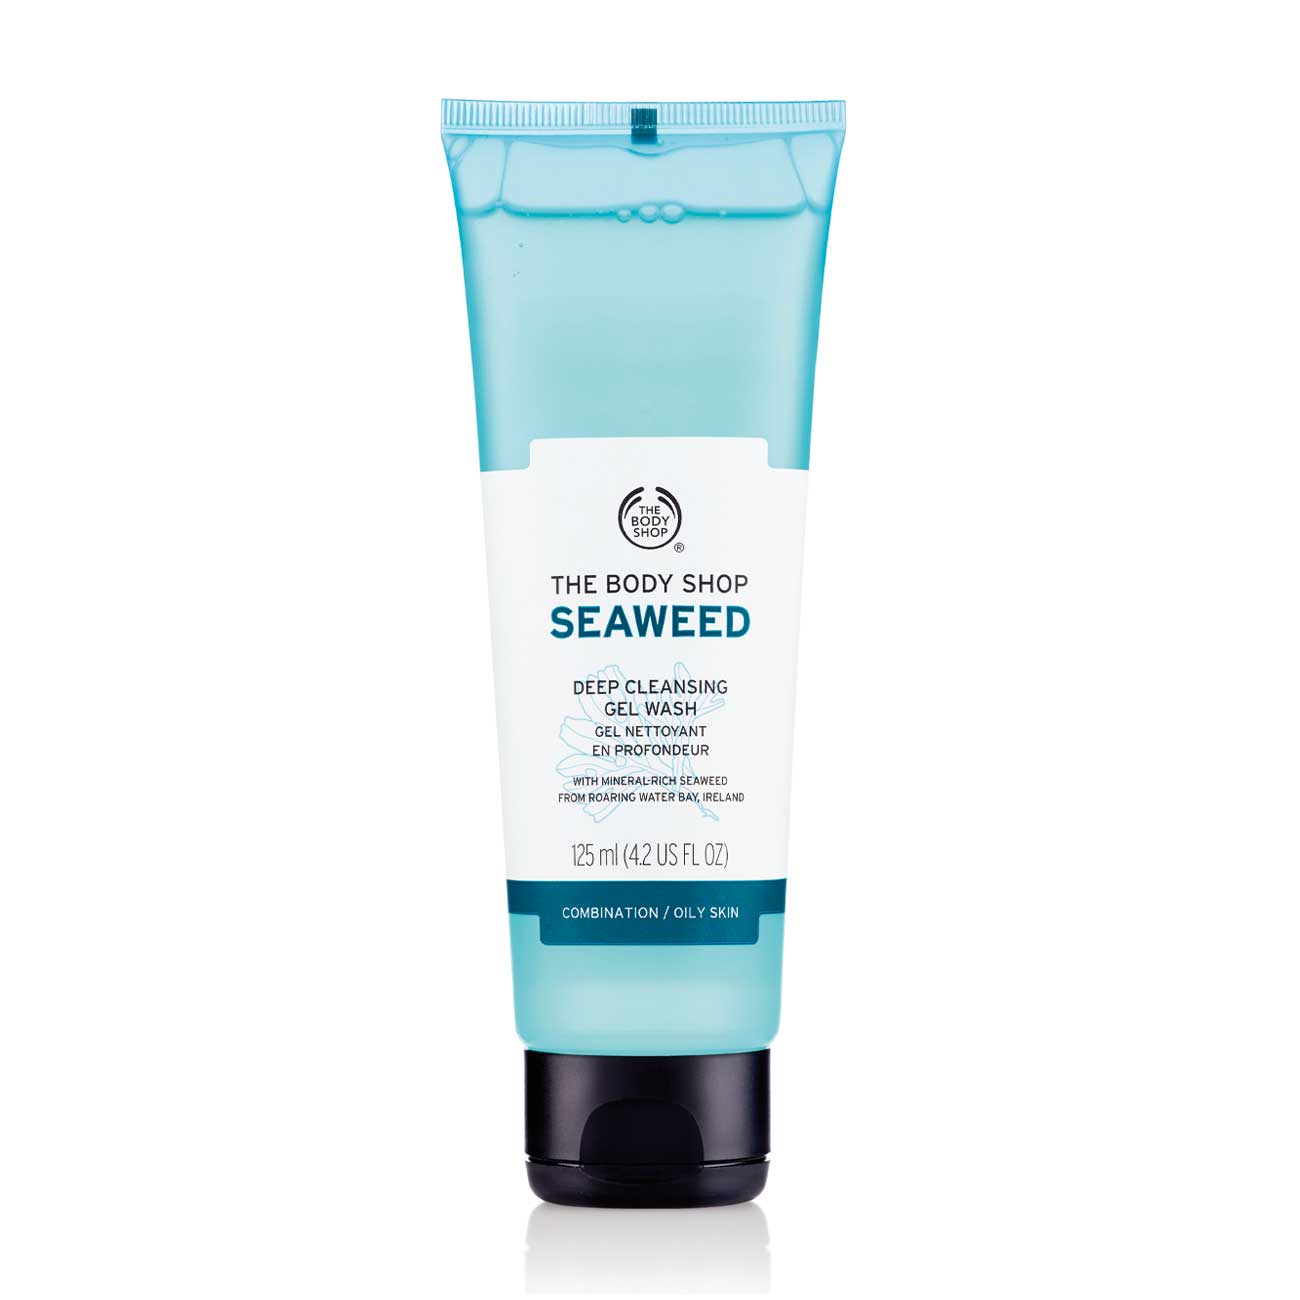 The Body Shop Seaweed Facial Wash